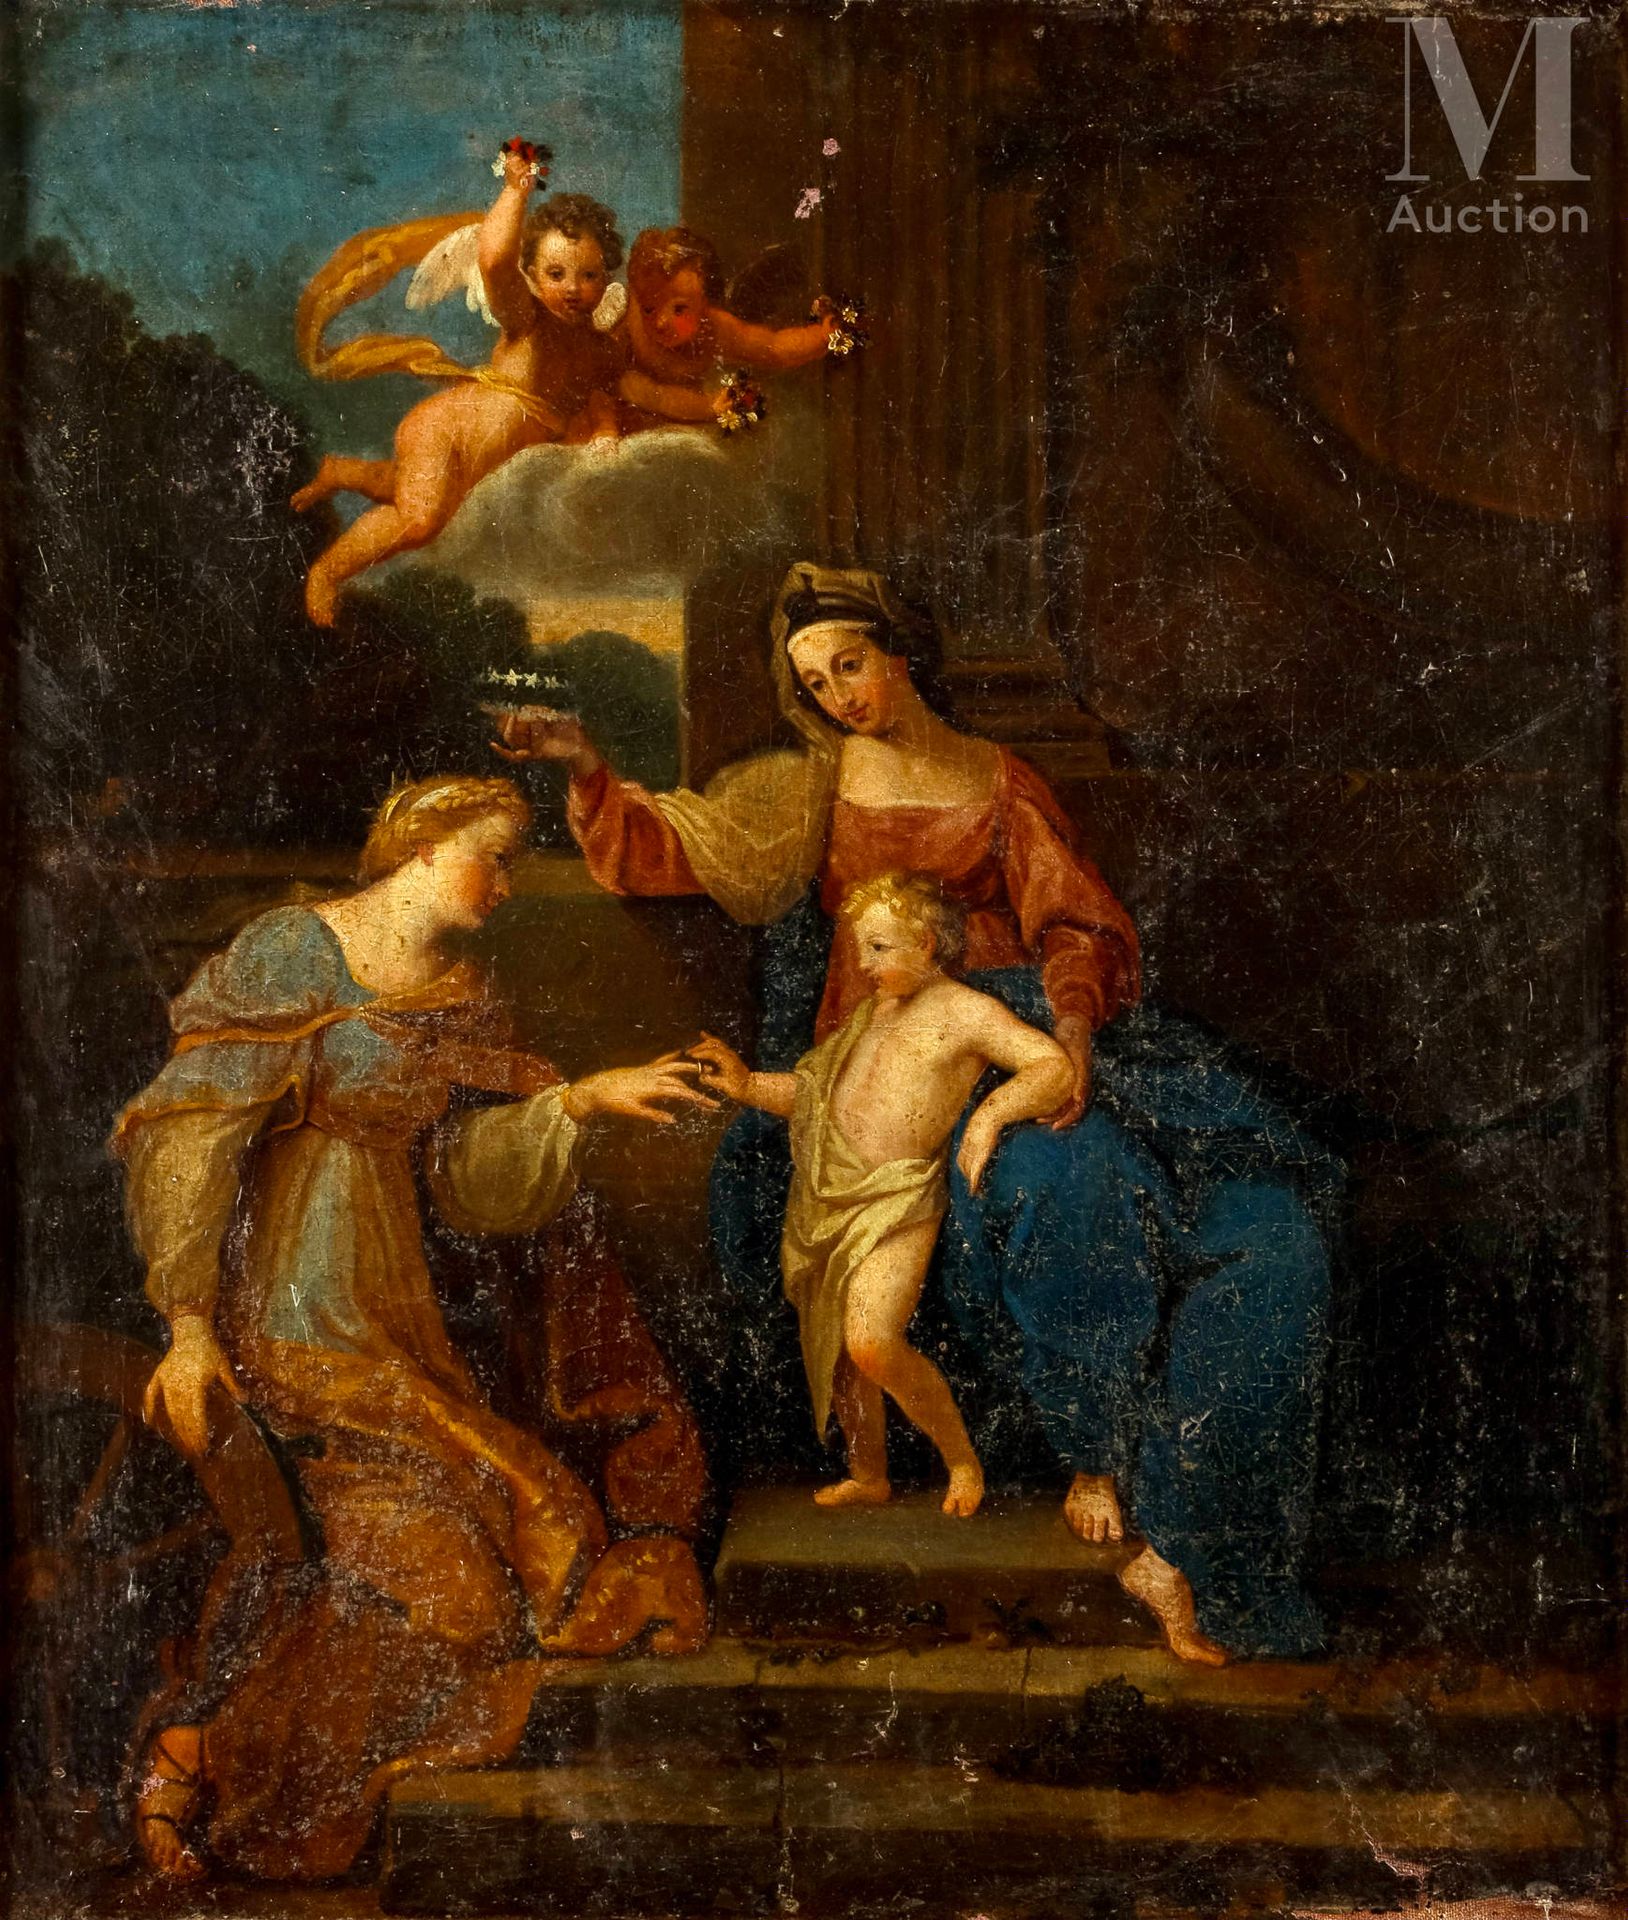 Ecole FRANCAISE du XVIIIème siècle 圣凯瑟琳的神秘婚姻
布面油画
54 x 46 厘米 
轻微事故、缺失部分和修复

卢浮宫 &hellip;